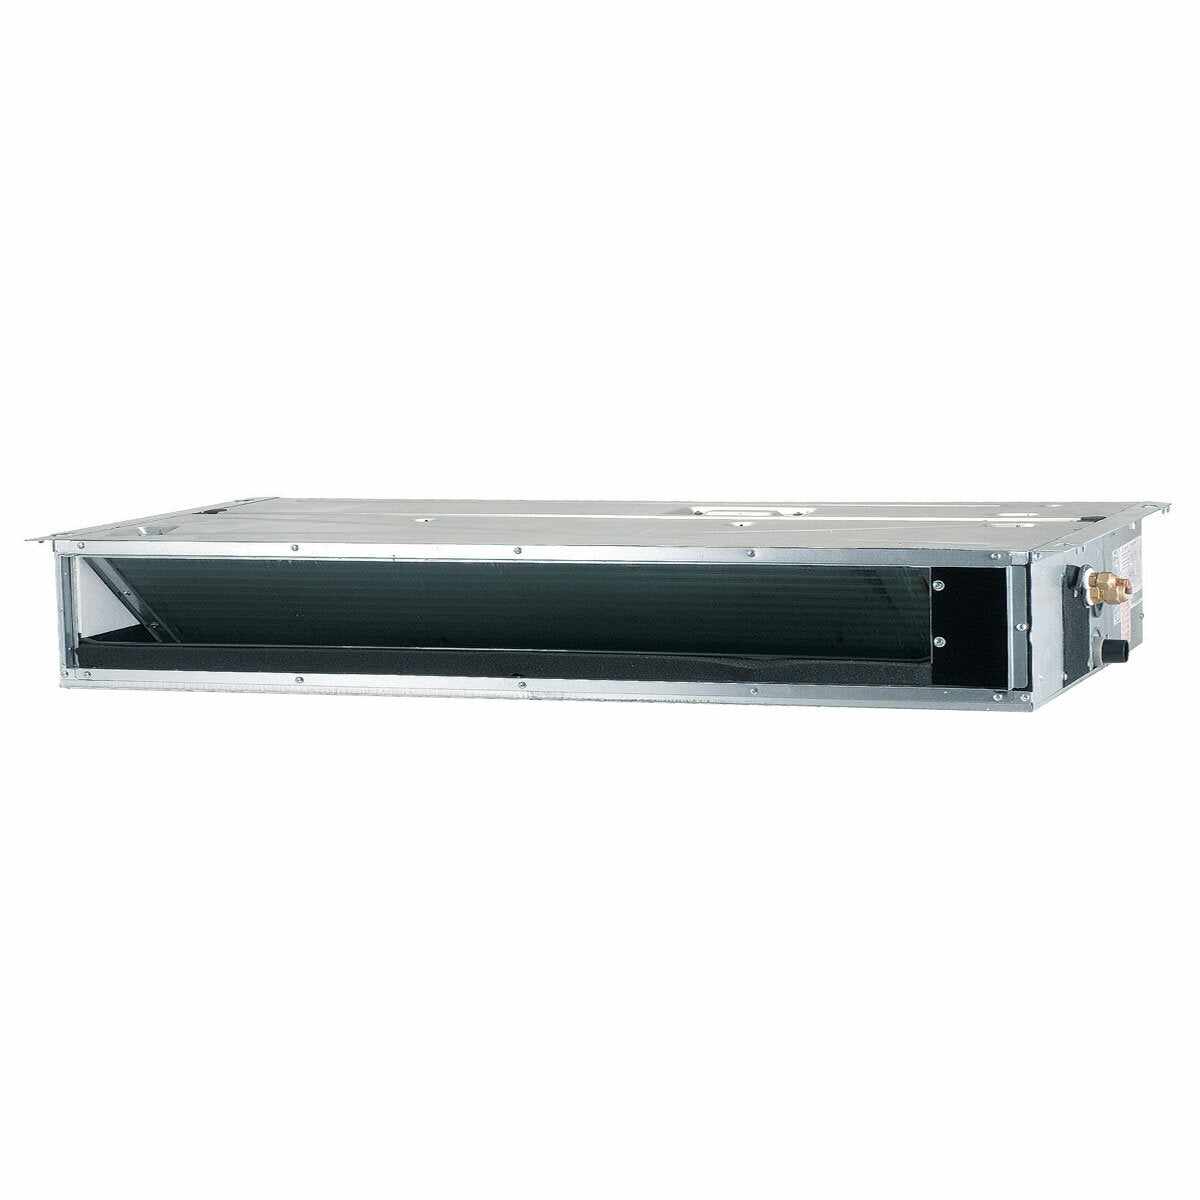 Dual split ductable Samsung air conditioner 9000 + 18000 BTU inverter A +++ outdoor unit 5.2 kW